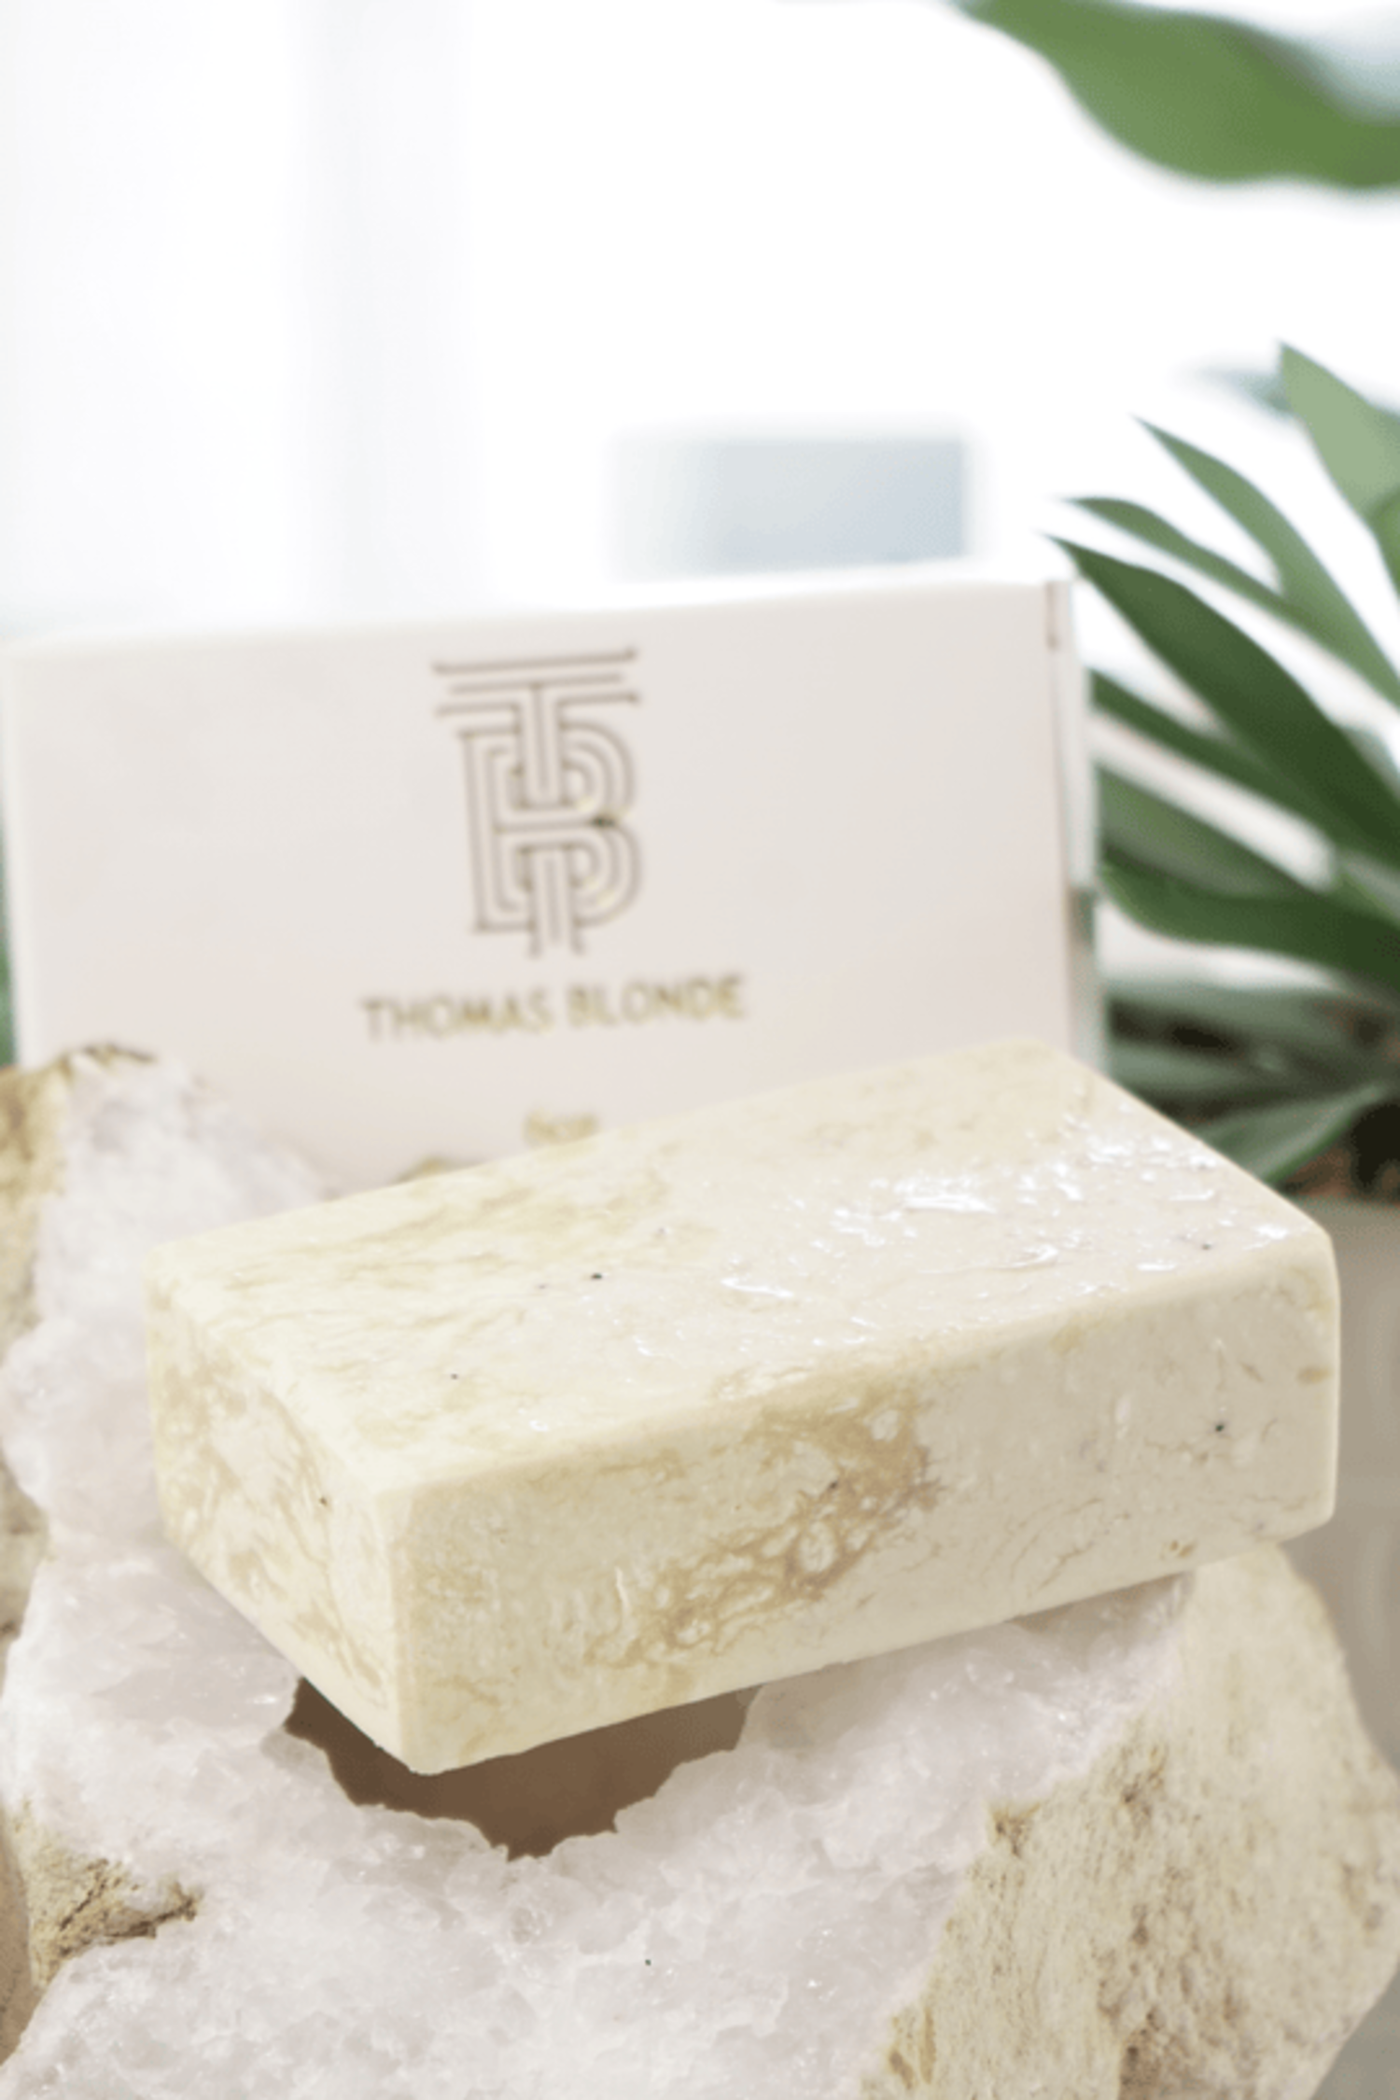 Thomas Blonde Exfoliating Bar Soap